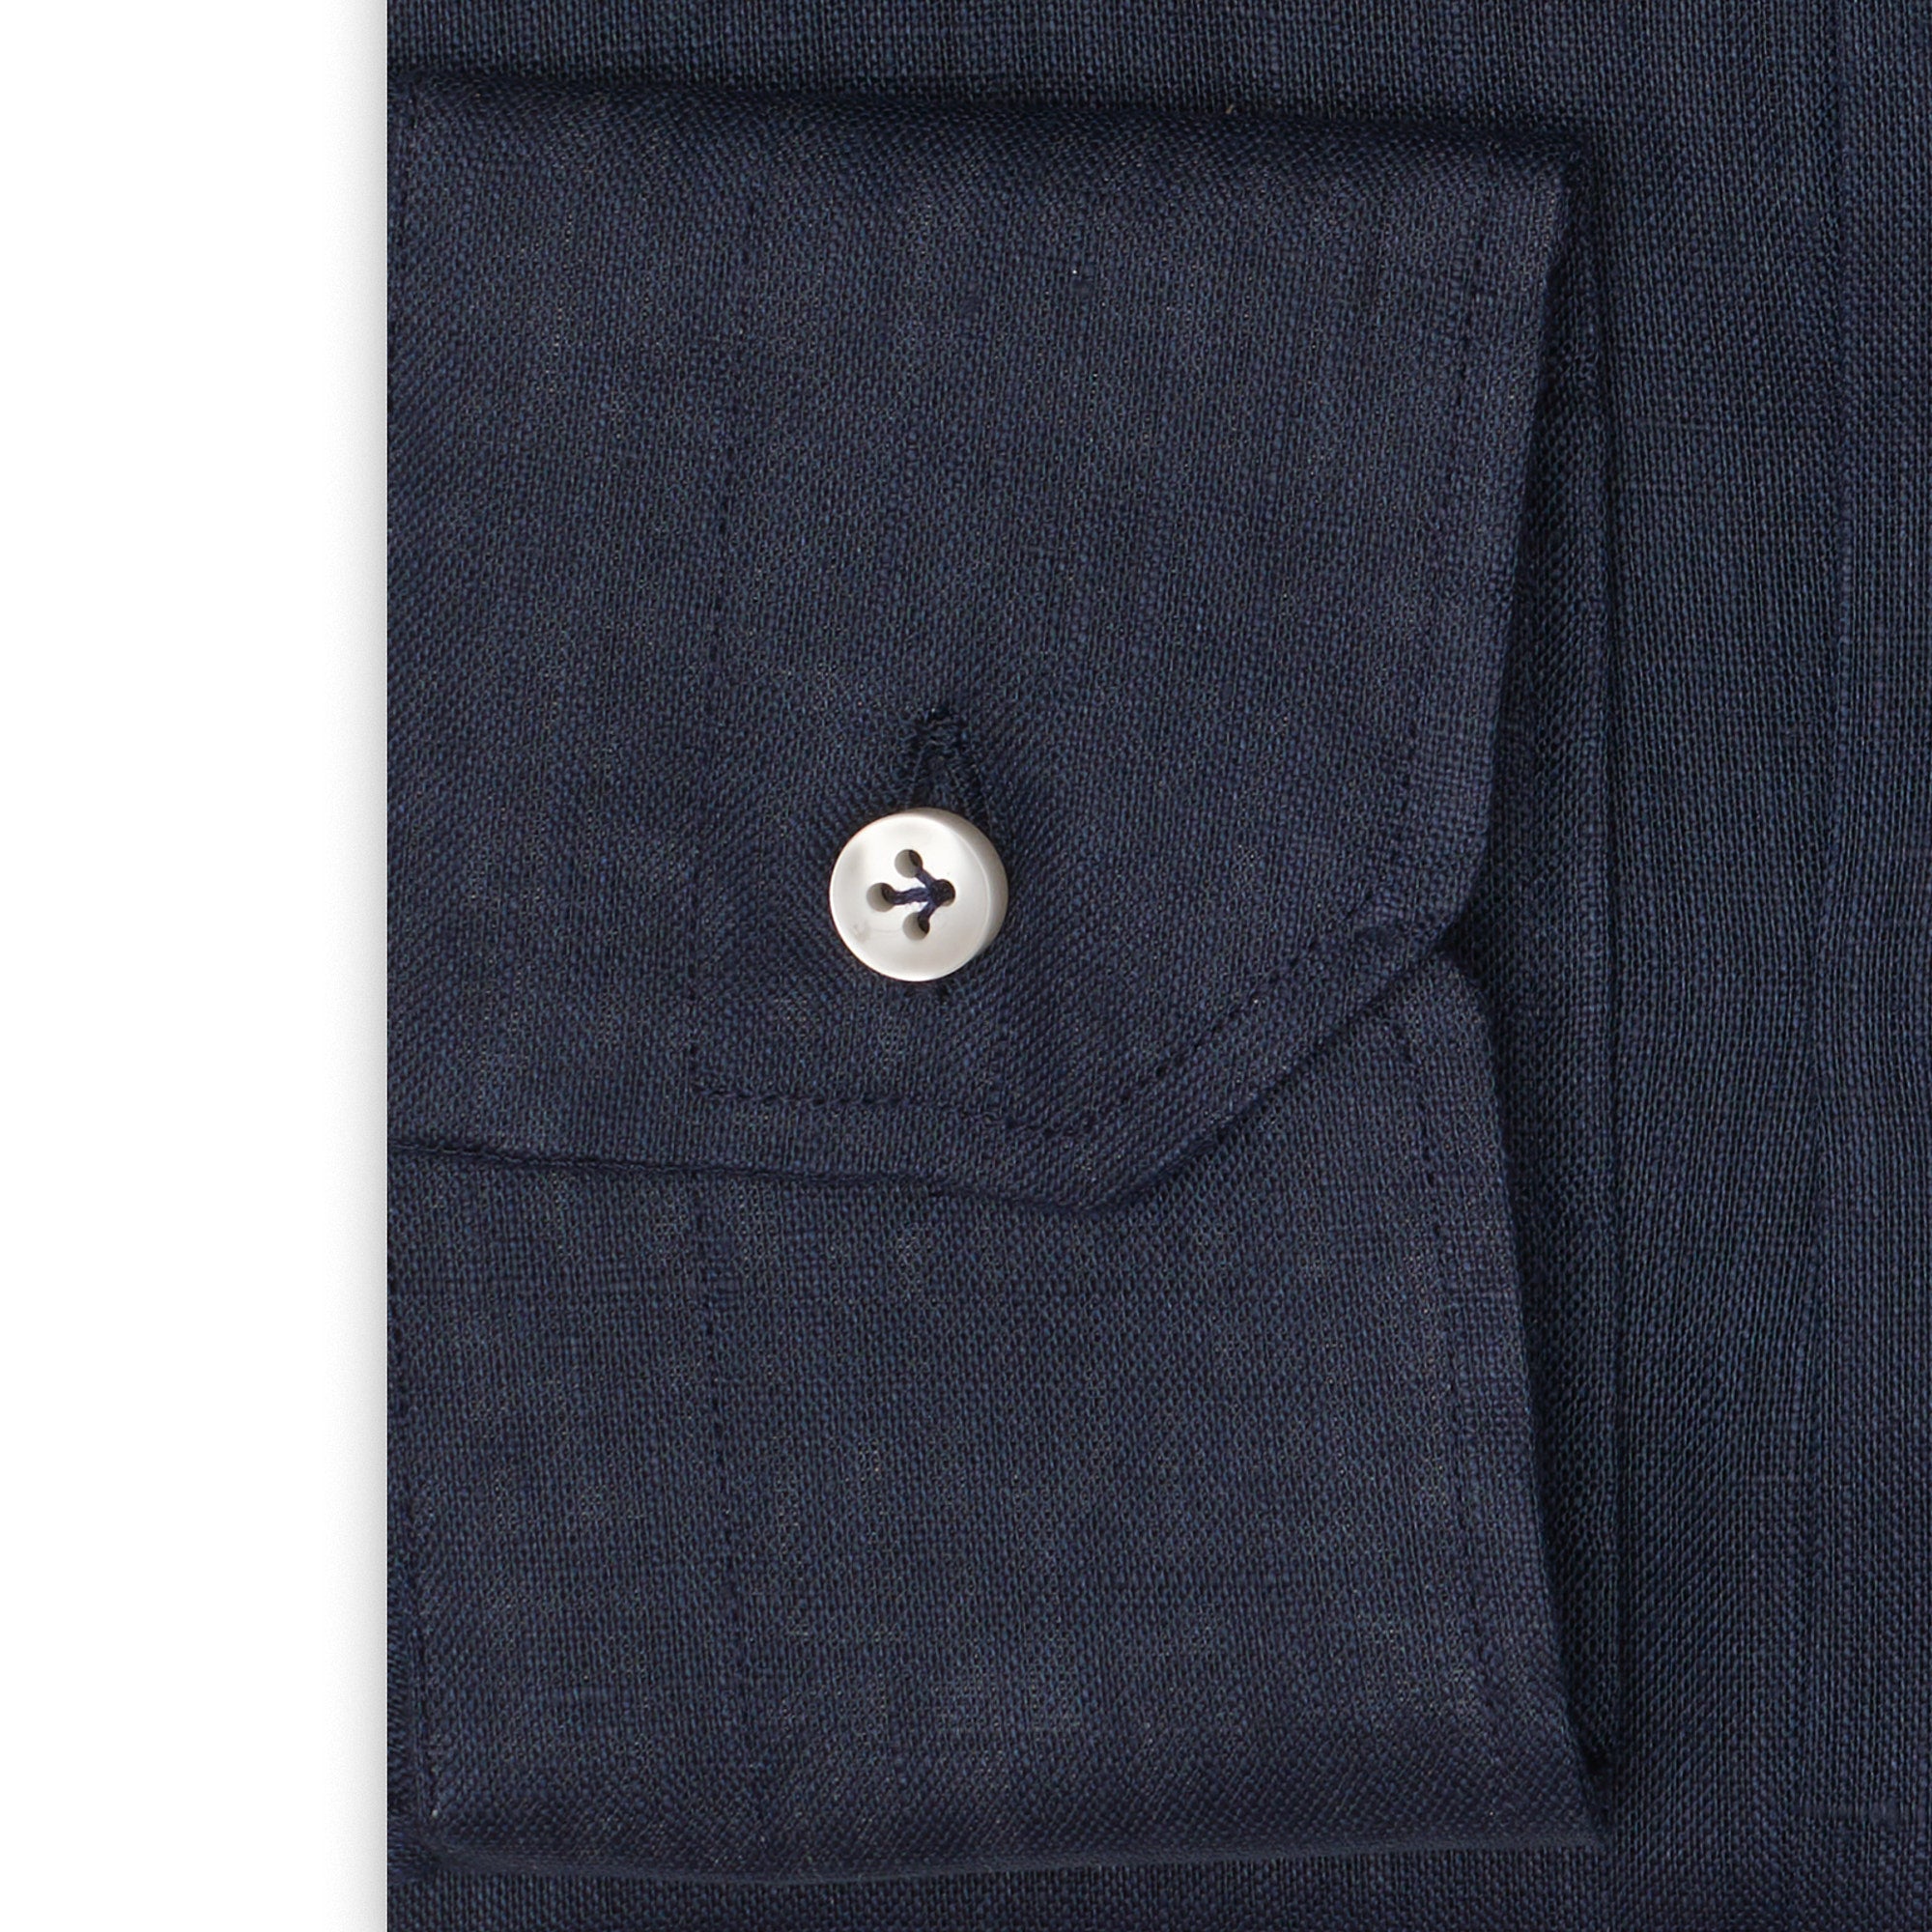 SARTORIO Napoli by KITON Midnight Blue Linen Spread Collar Shirt Slim Fit NEW SARTORIO